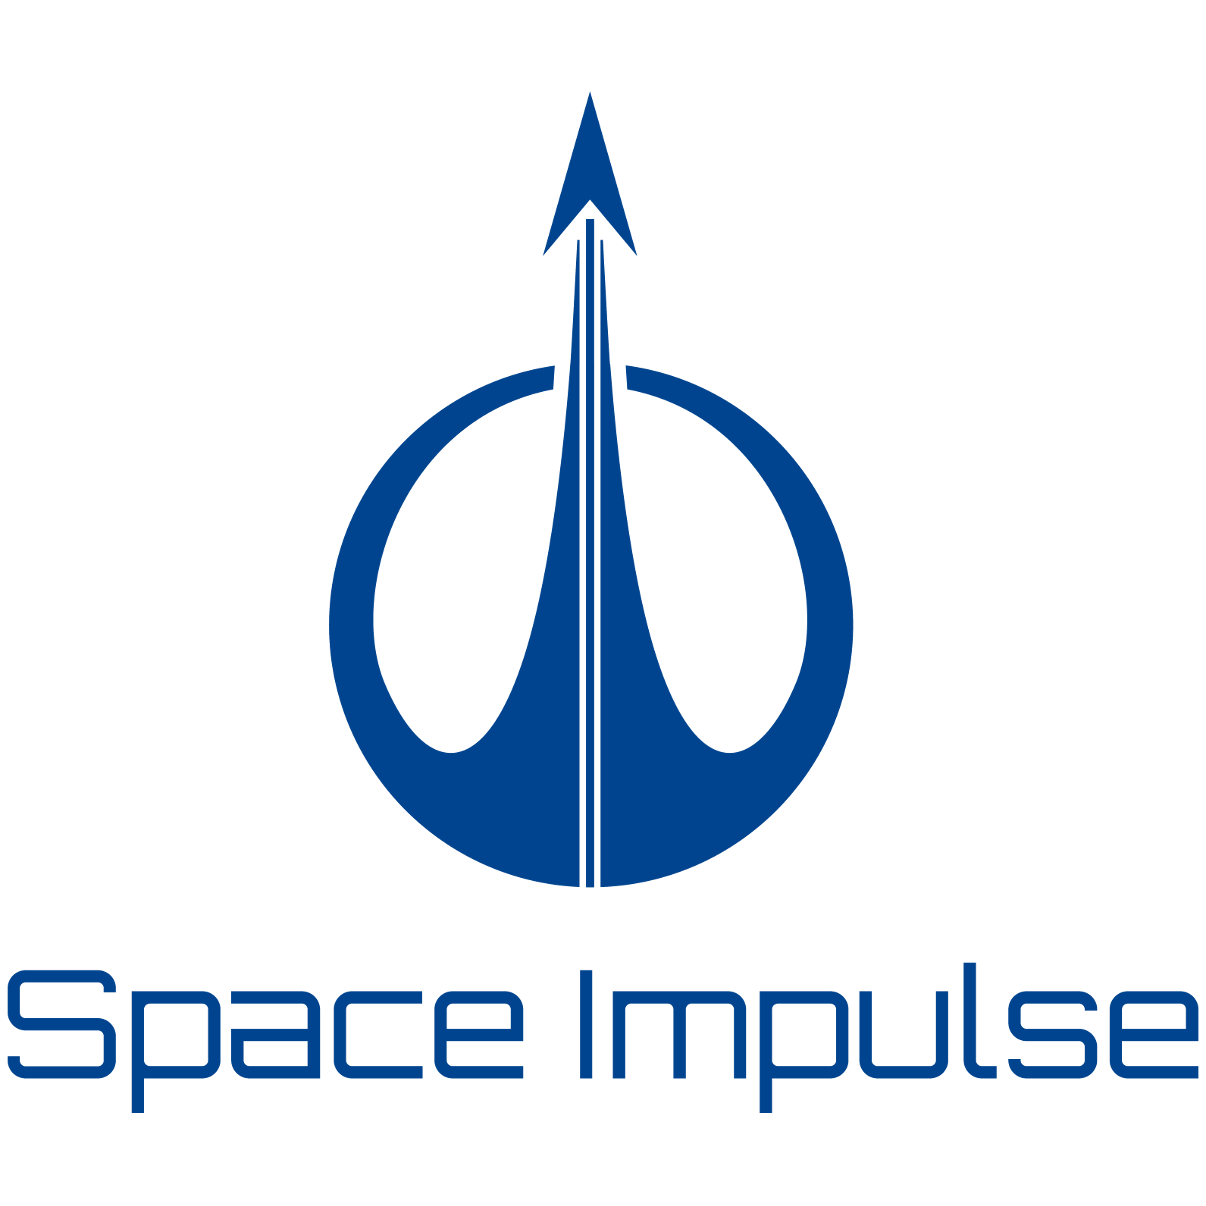 Us Aerospace Company Logo - Space companies - Space Individuals